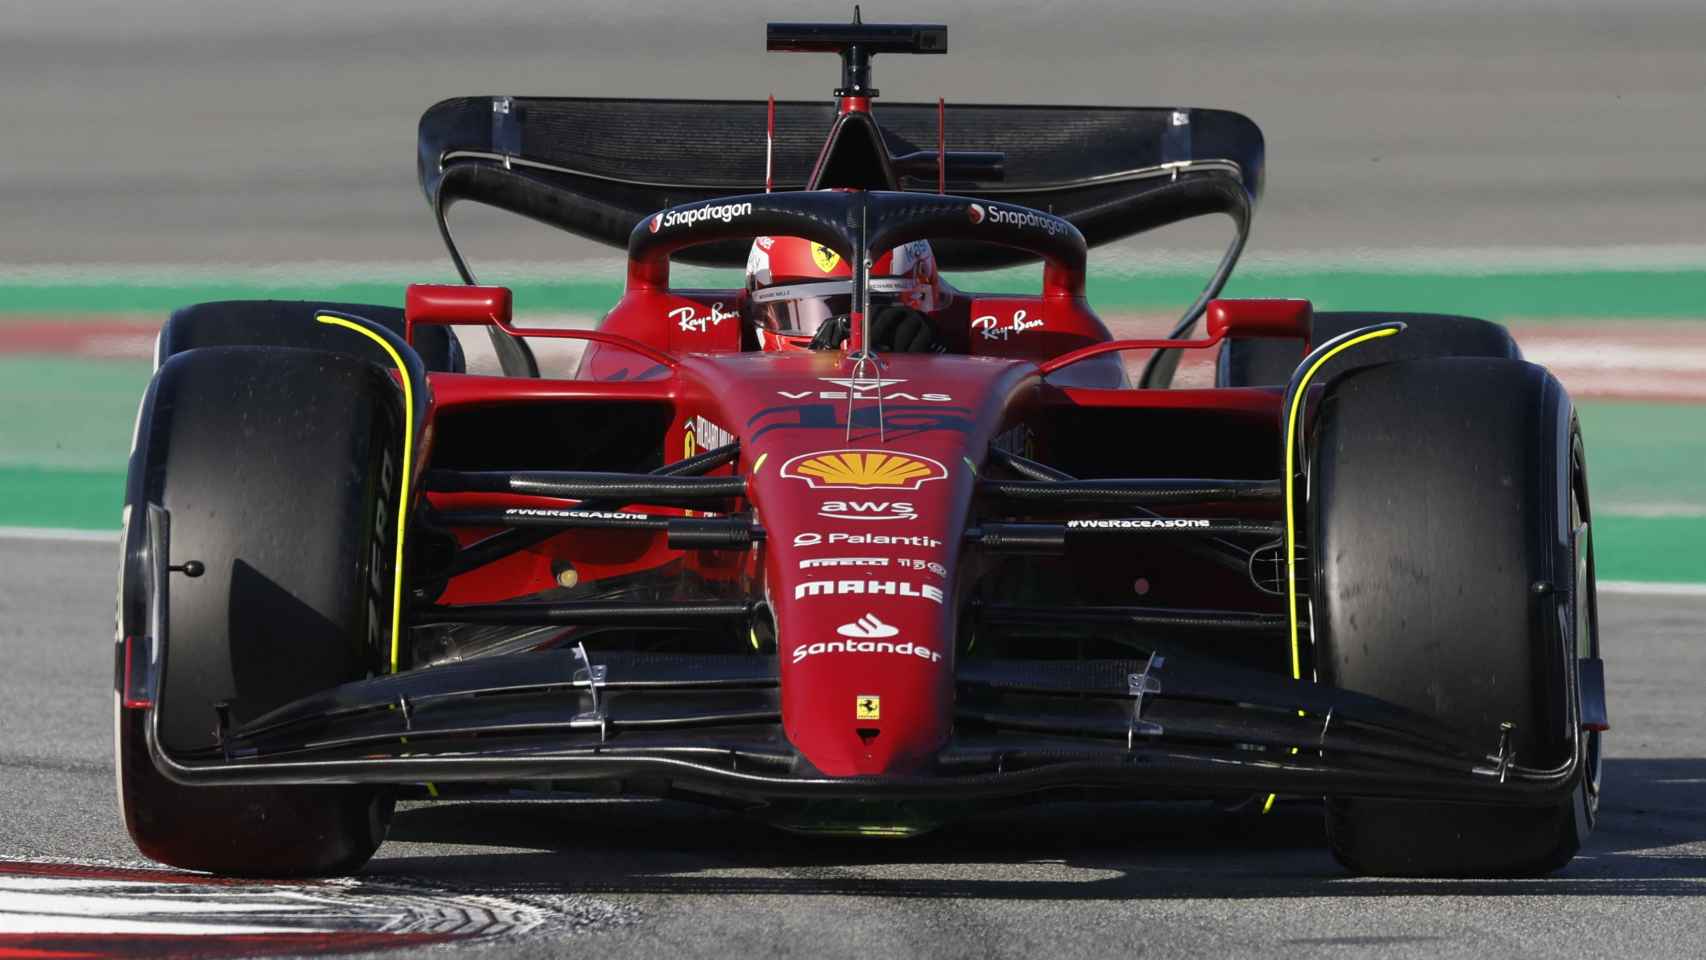 Ferrari F1-75, pilotado por Charles Leclerc